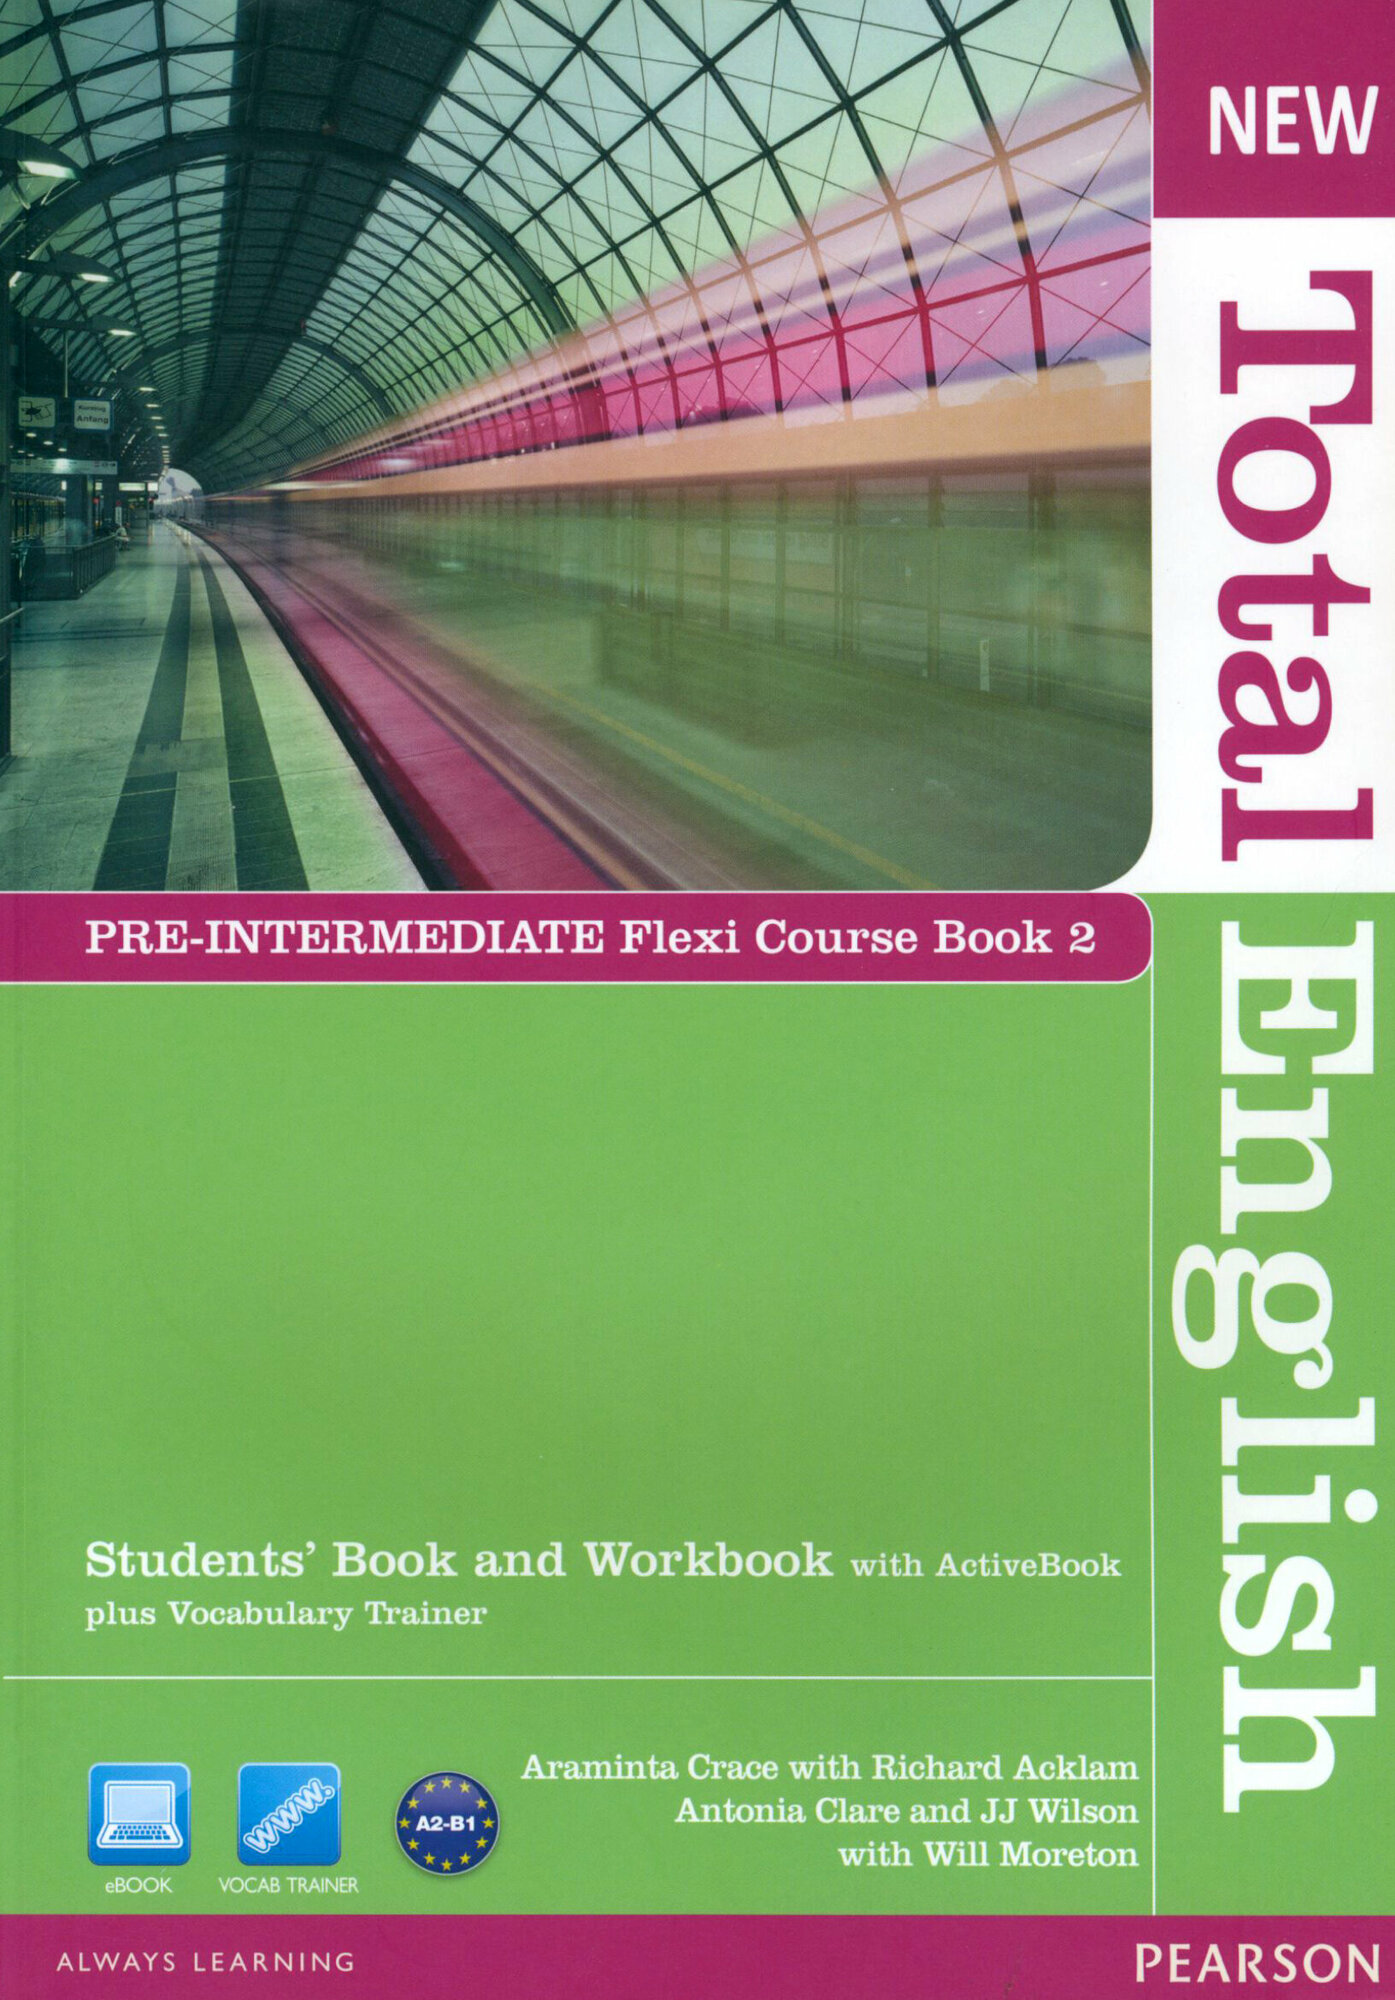 New Total English. Pre-Intermediate. Flexi Course book 2. Students' Book and Workbook (+DVD) / Учебник / Crace Araminta